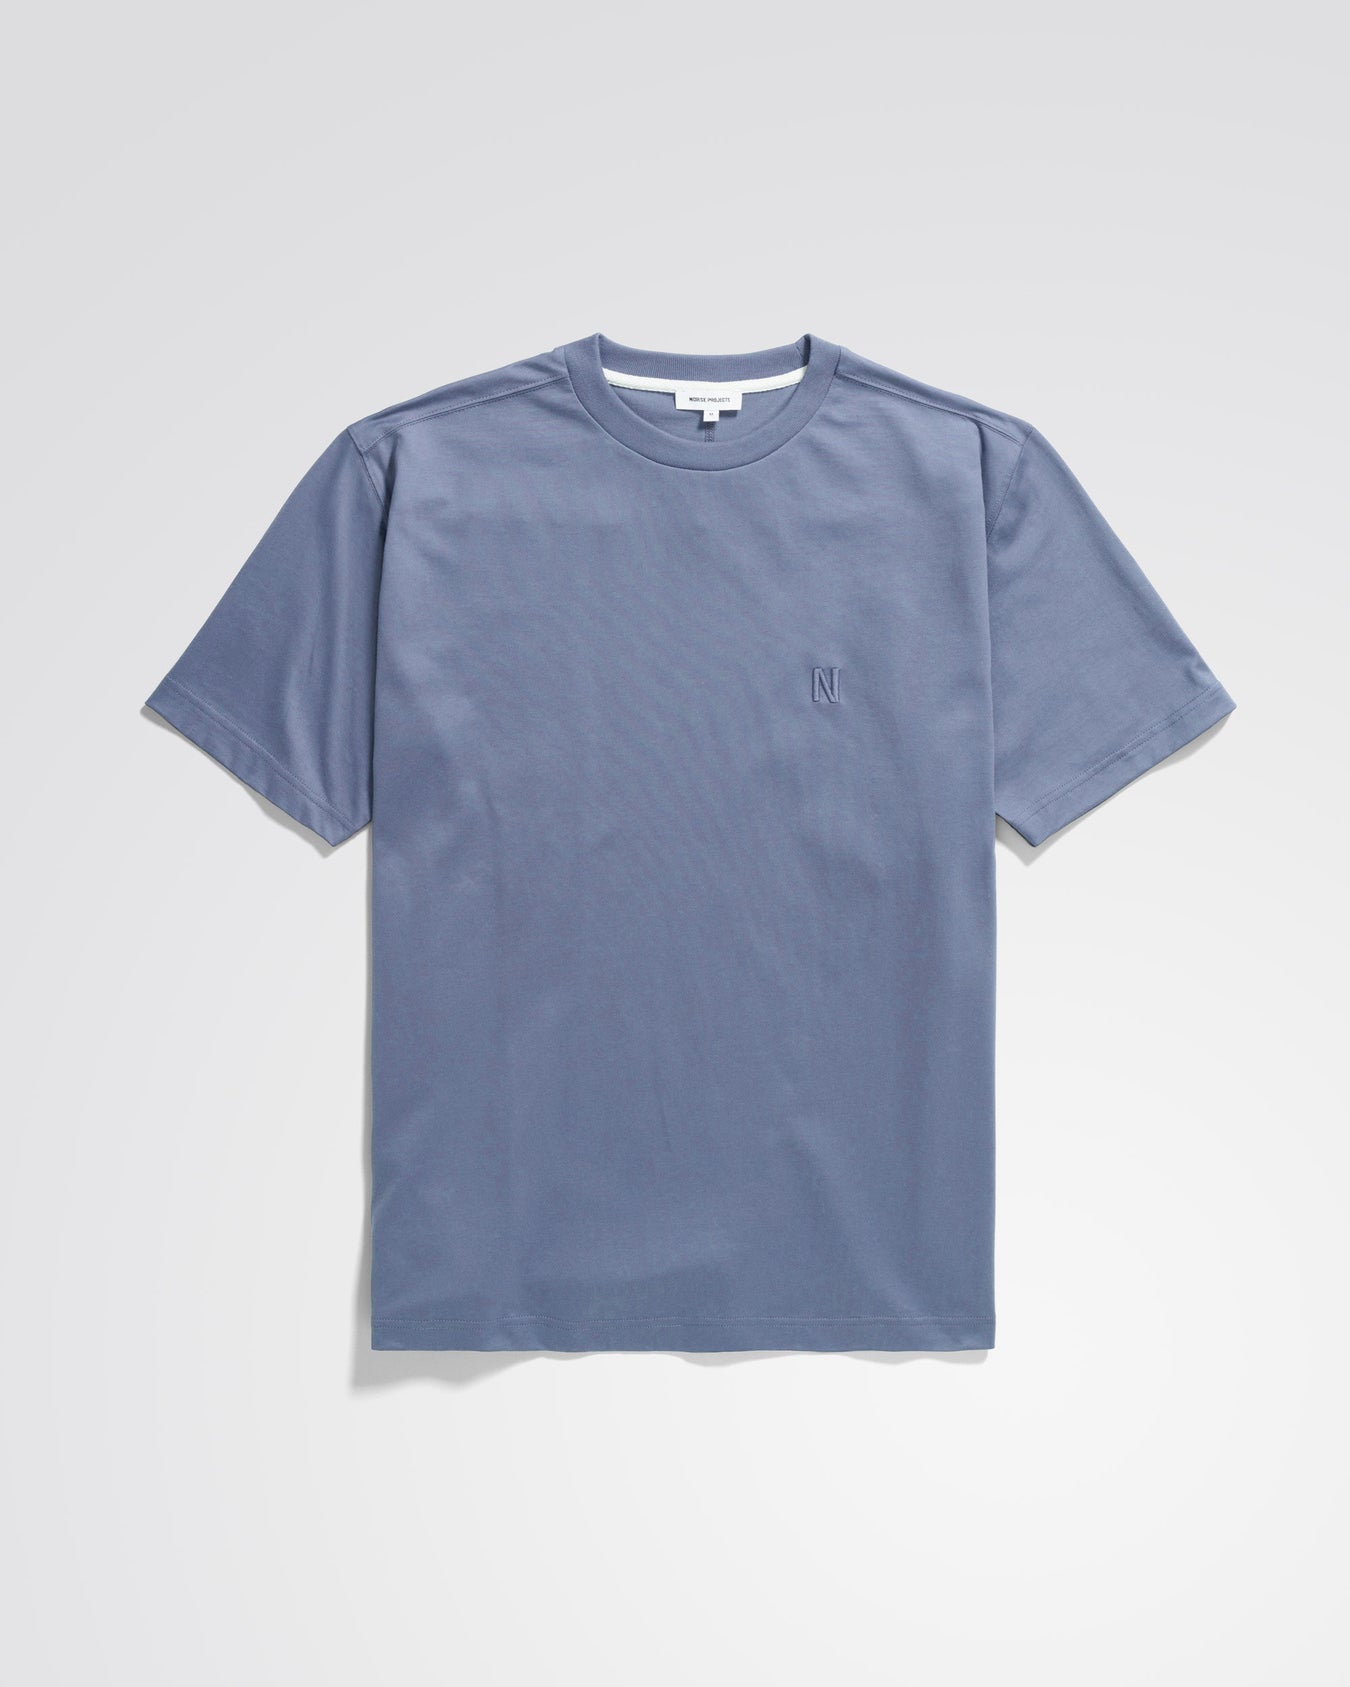 Johannes N Logo T-shirt - Fog Blue